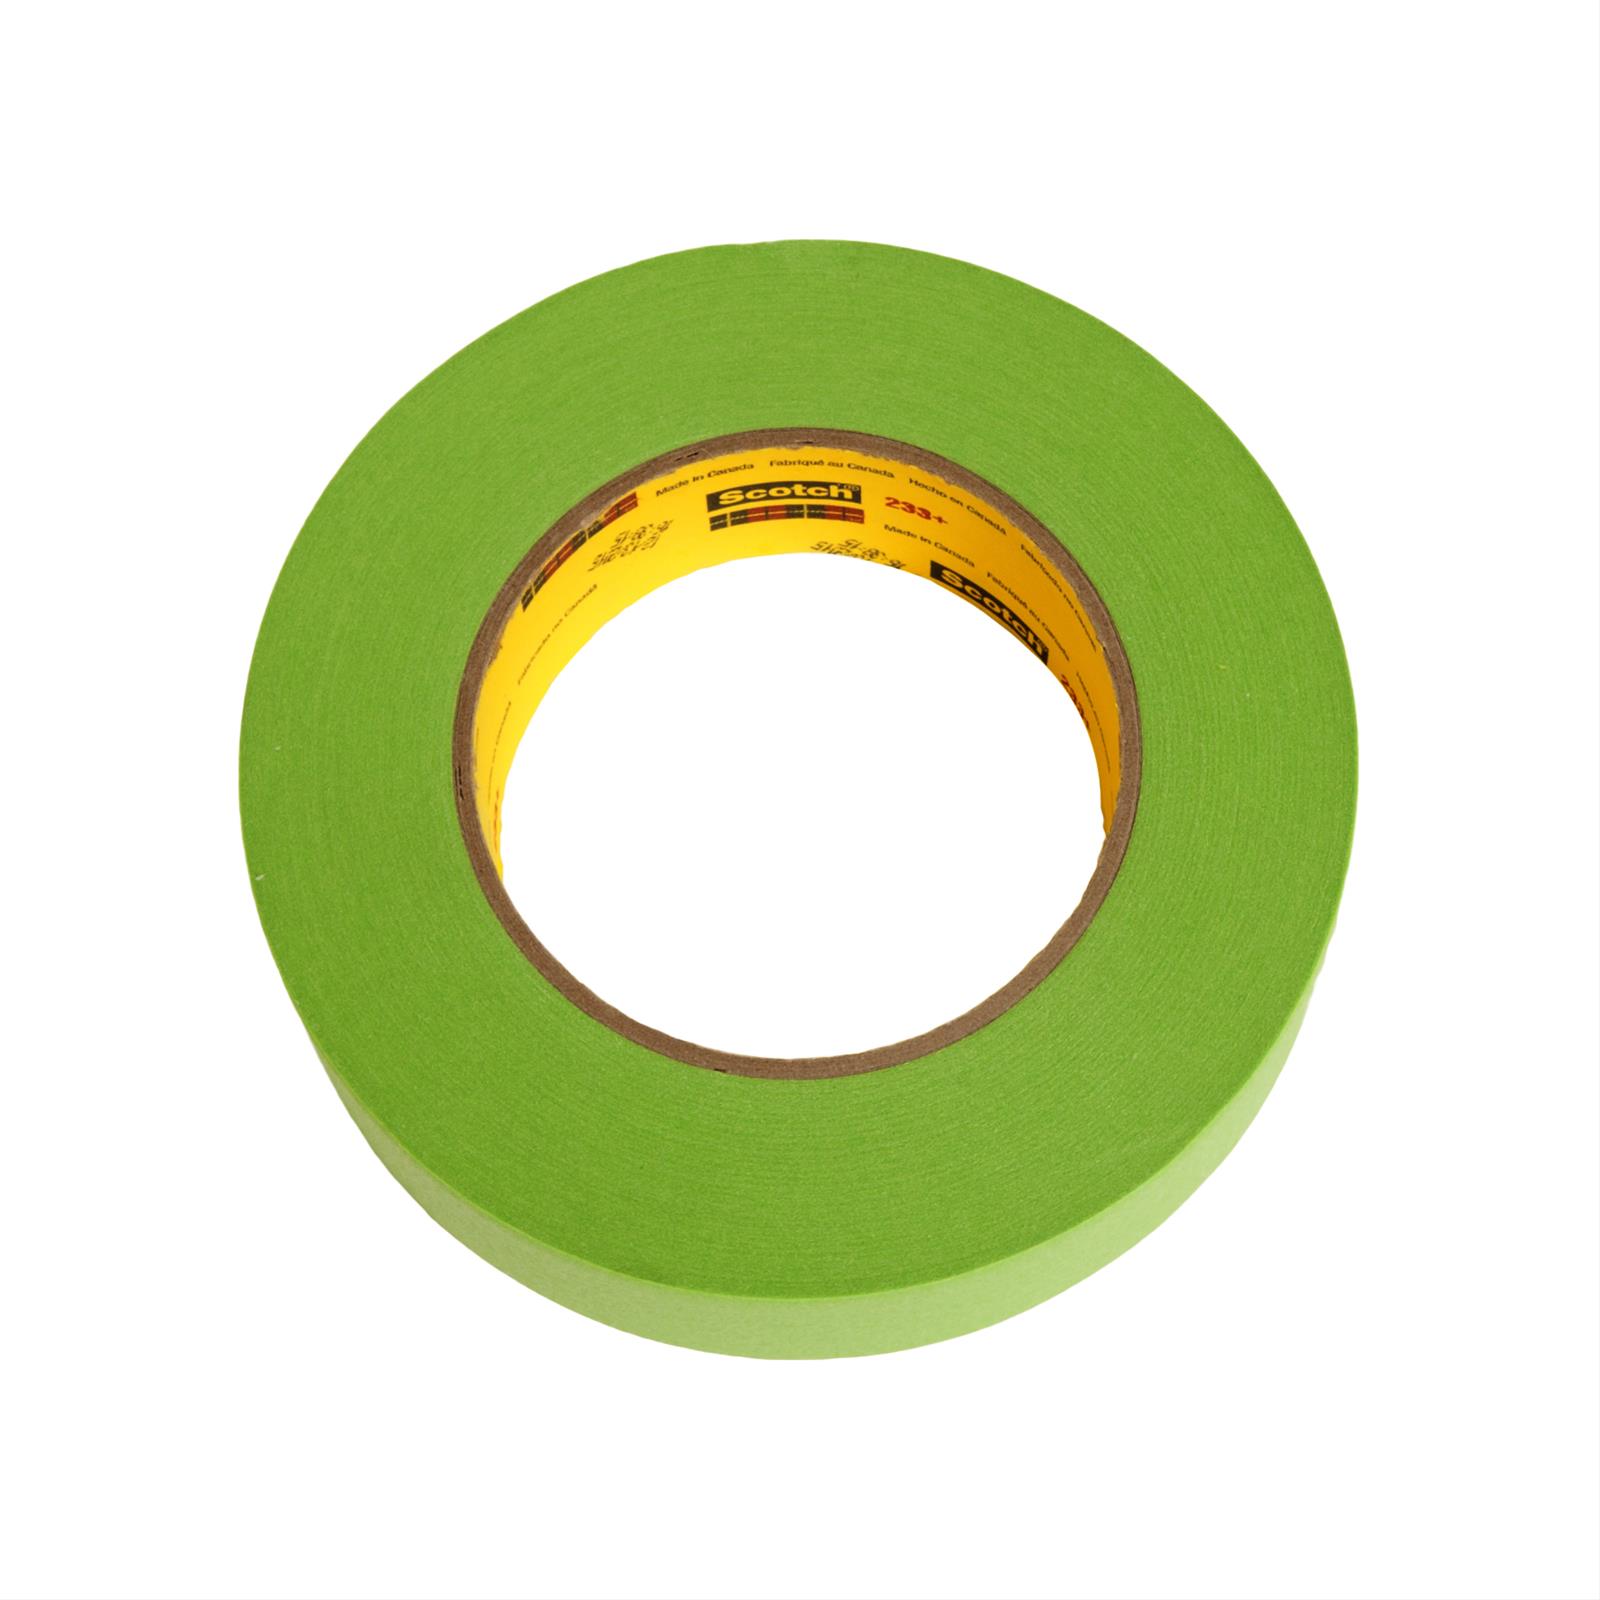 paint car Performance green masking tape 18mmX55m 3M™ Scotch® 233 